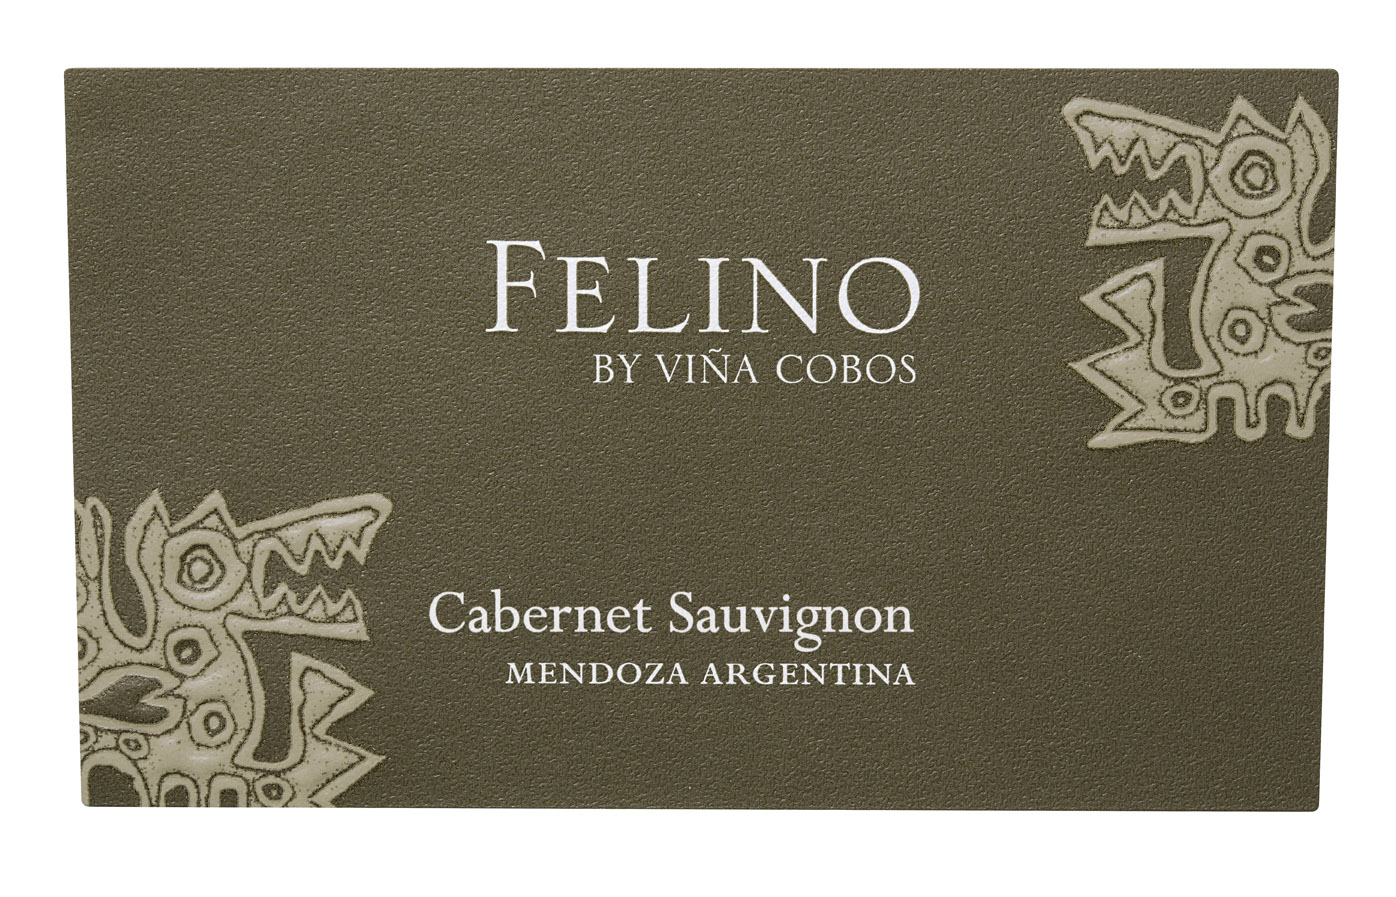 2020 Vina Cobos Felino Cabernet Sauvignon Mendoza - click image for full description